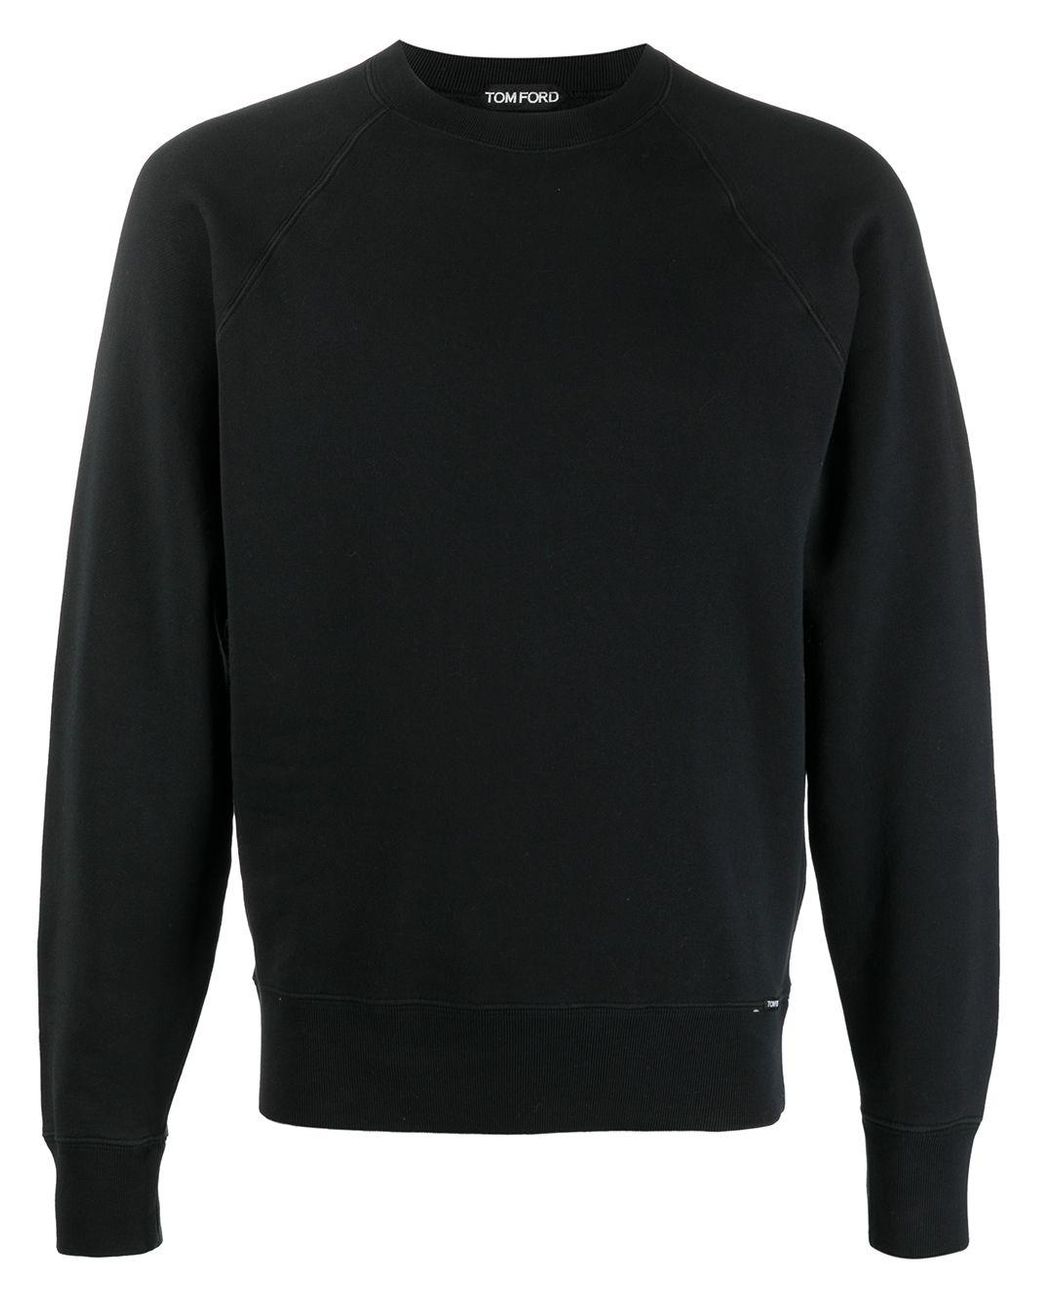 Tom Ford Cotton Crew-neck Long-sleeve Sweatshirt in Black for Men - Lyst